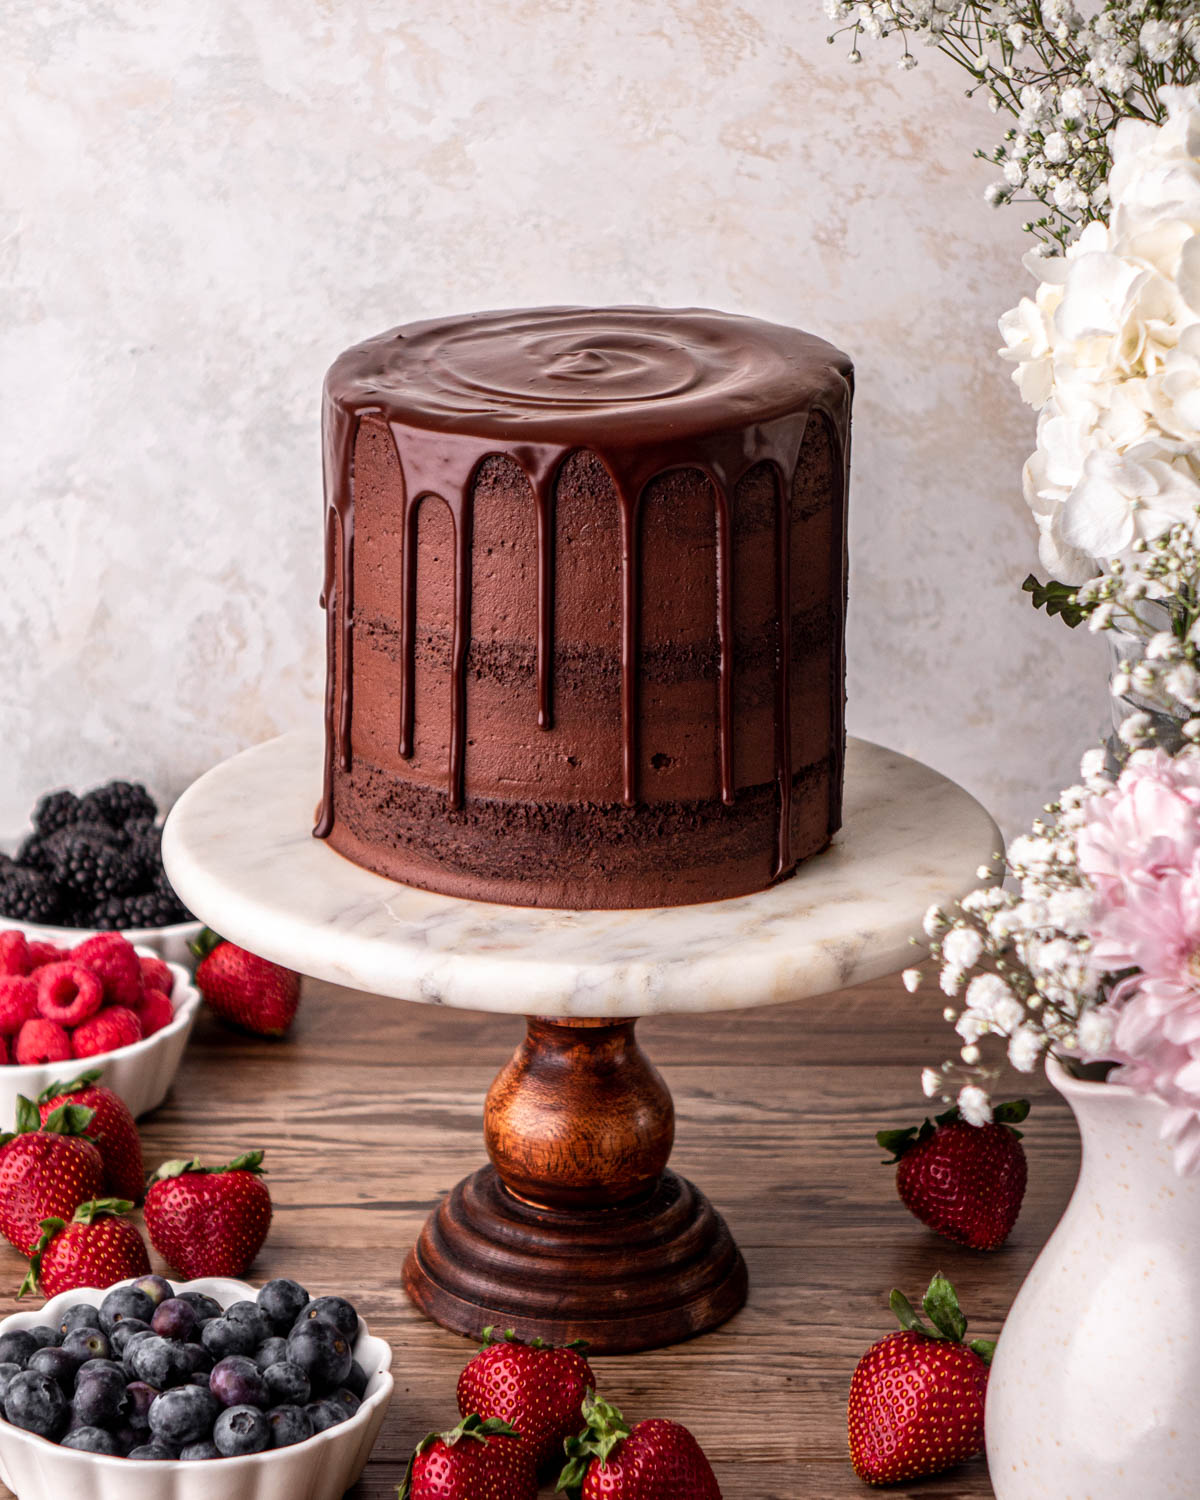 chocolate cake with chocolate ganache drip on it